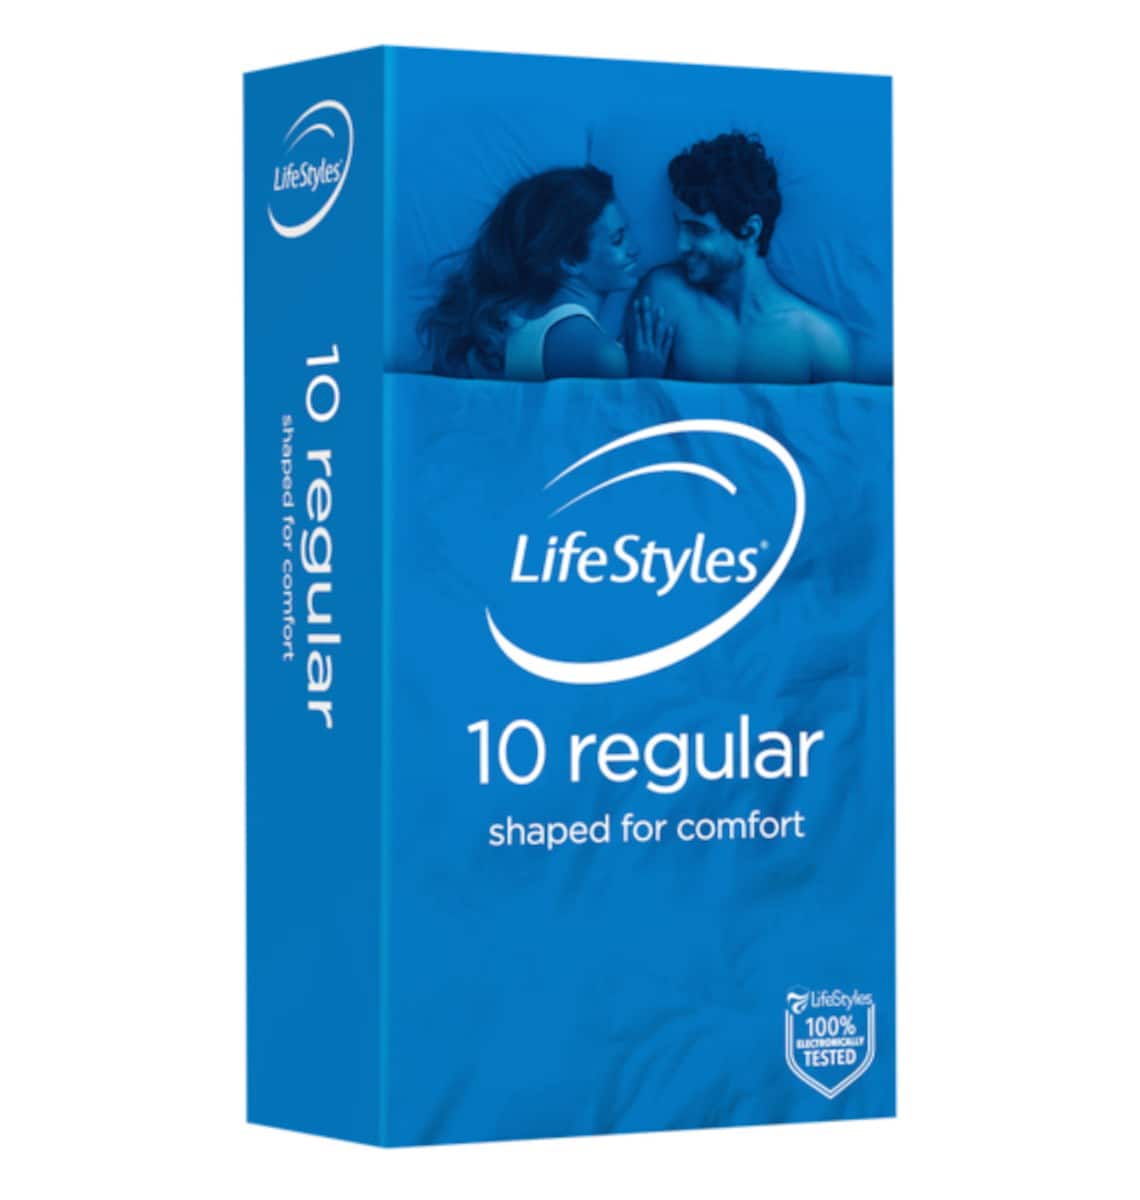 LifeStyles Regular Condoms 10 Pack